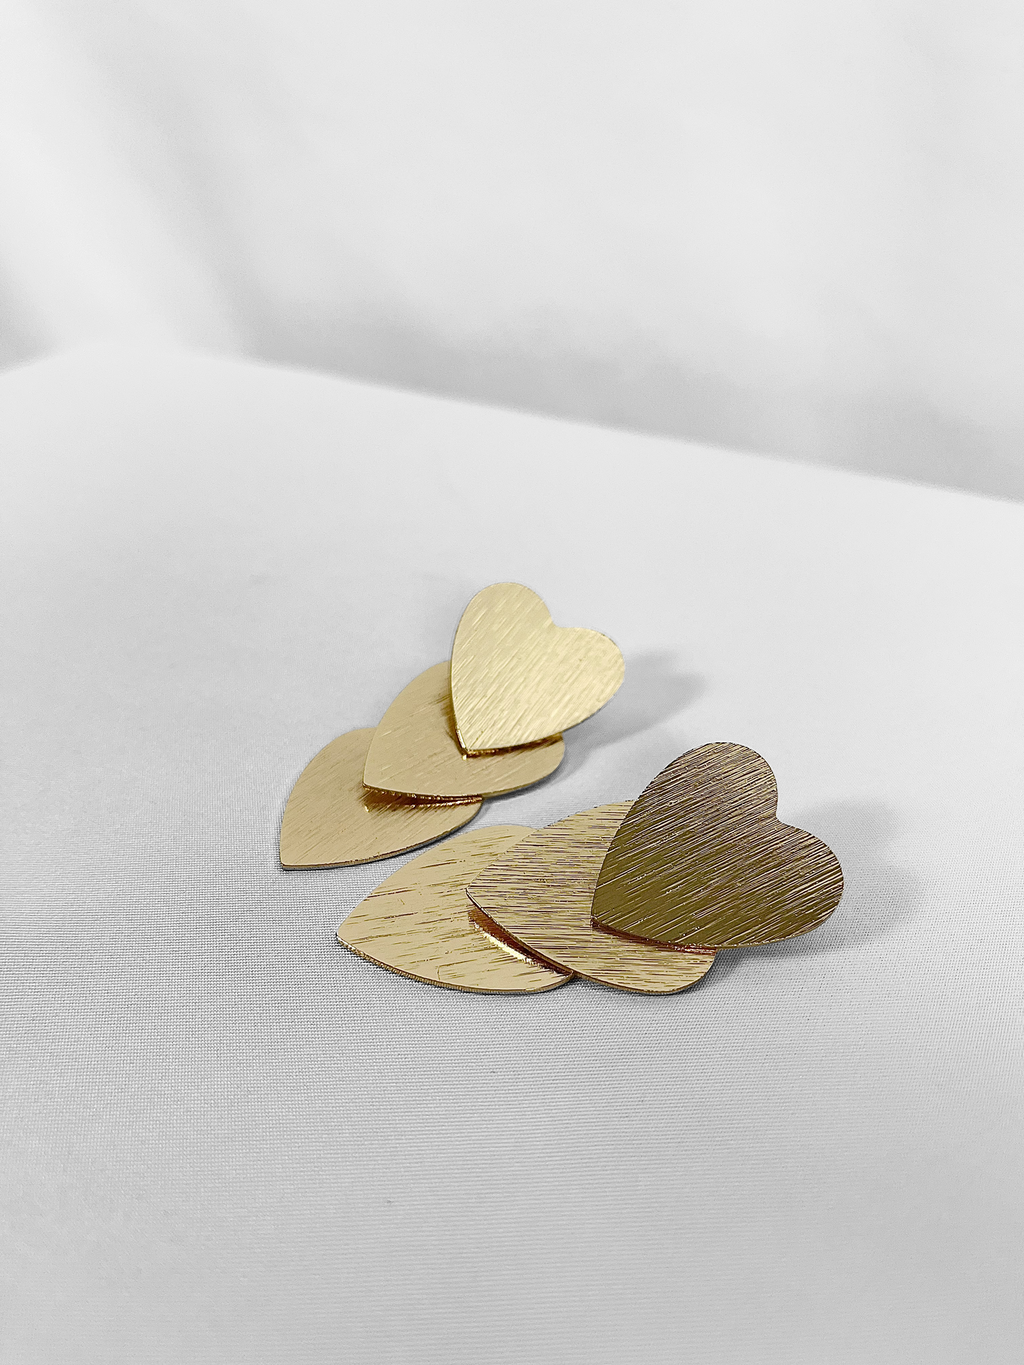 Vintage 3-Tiered Gold Heart Earrings